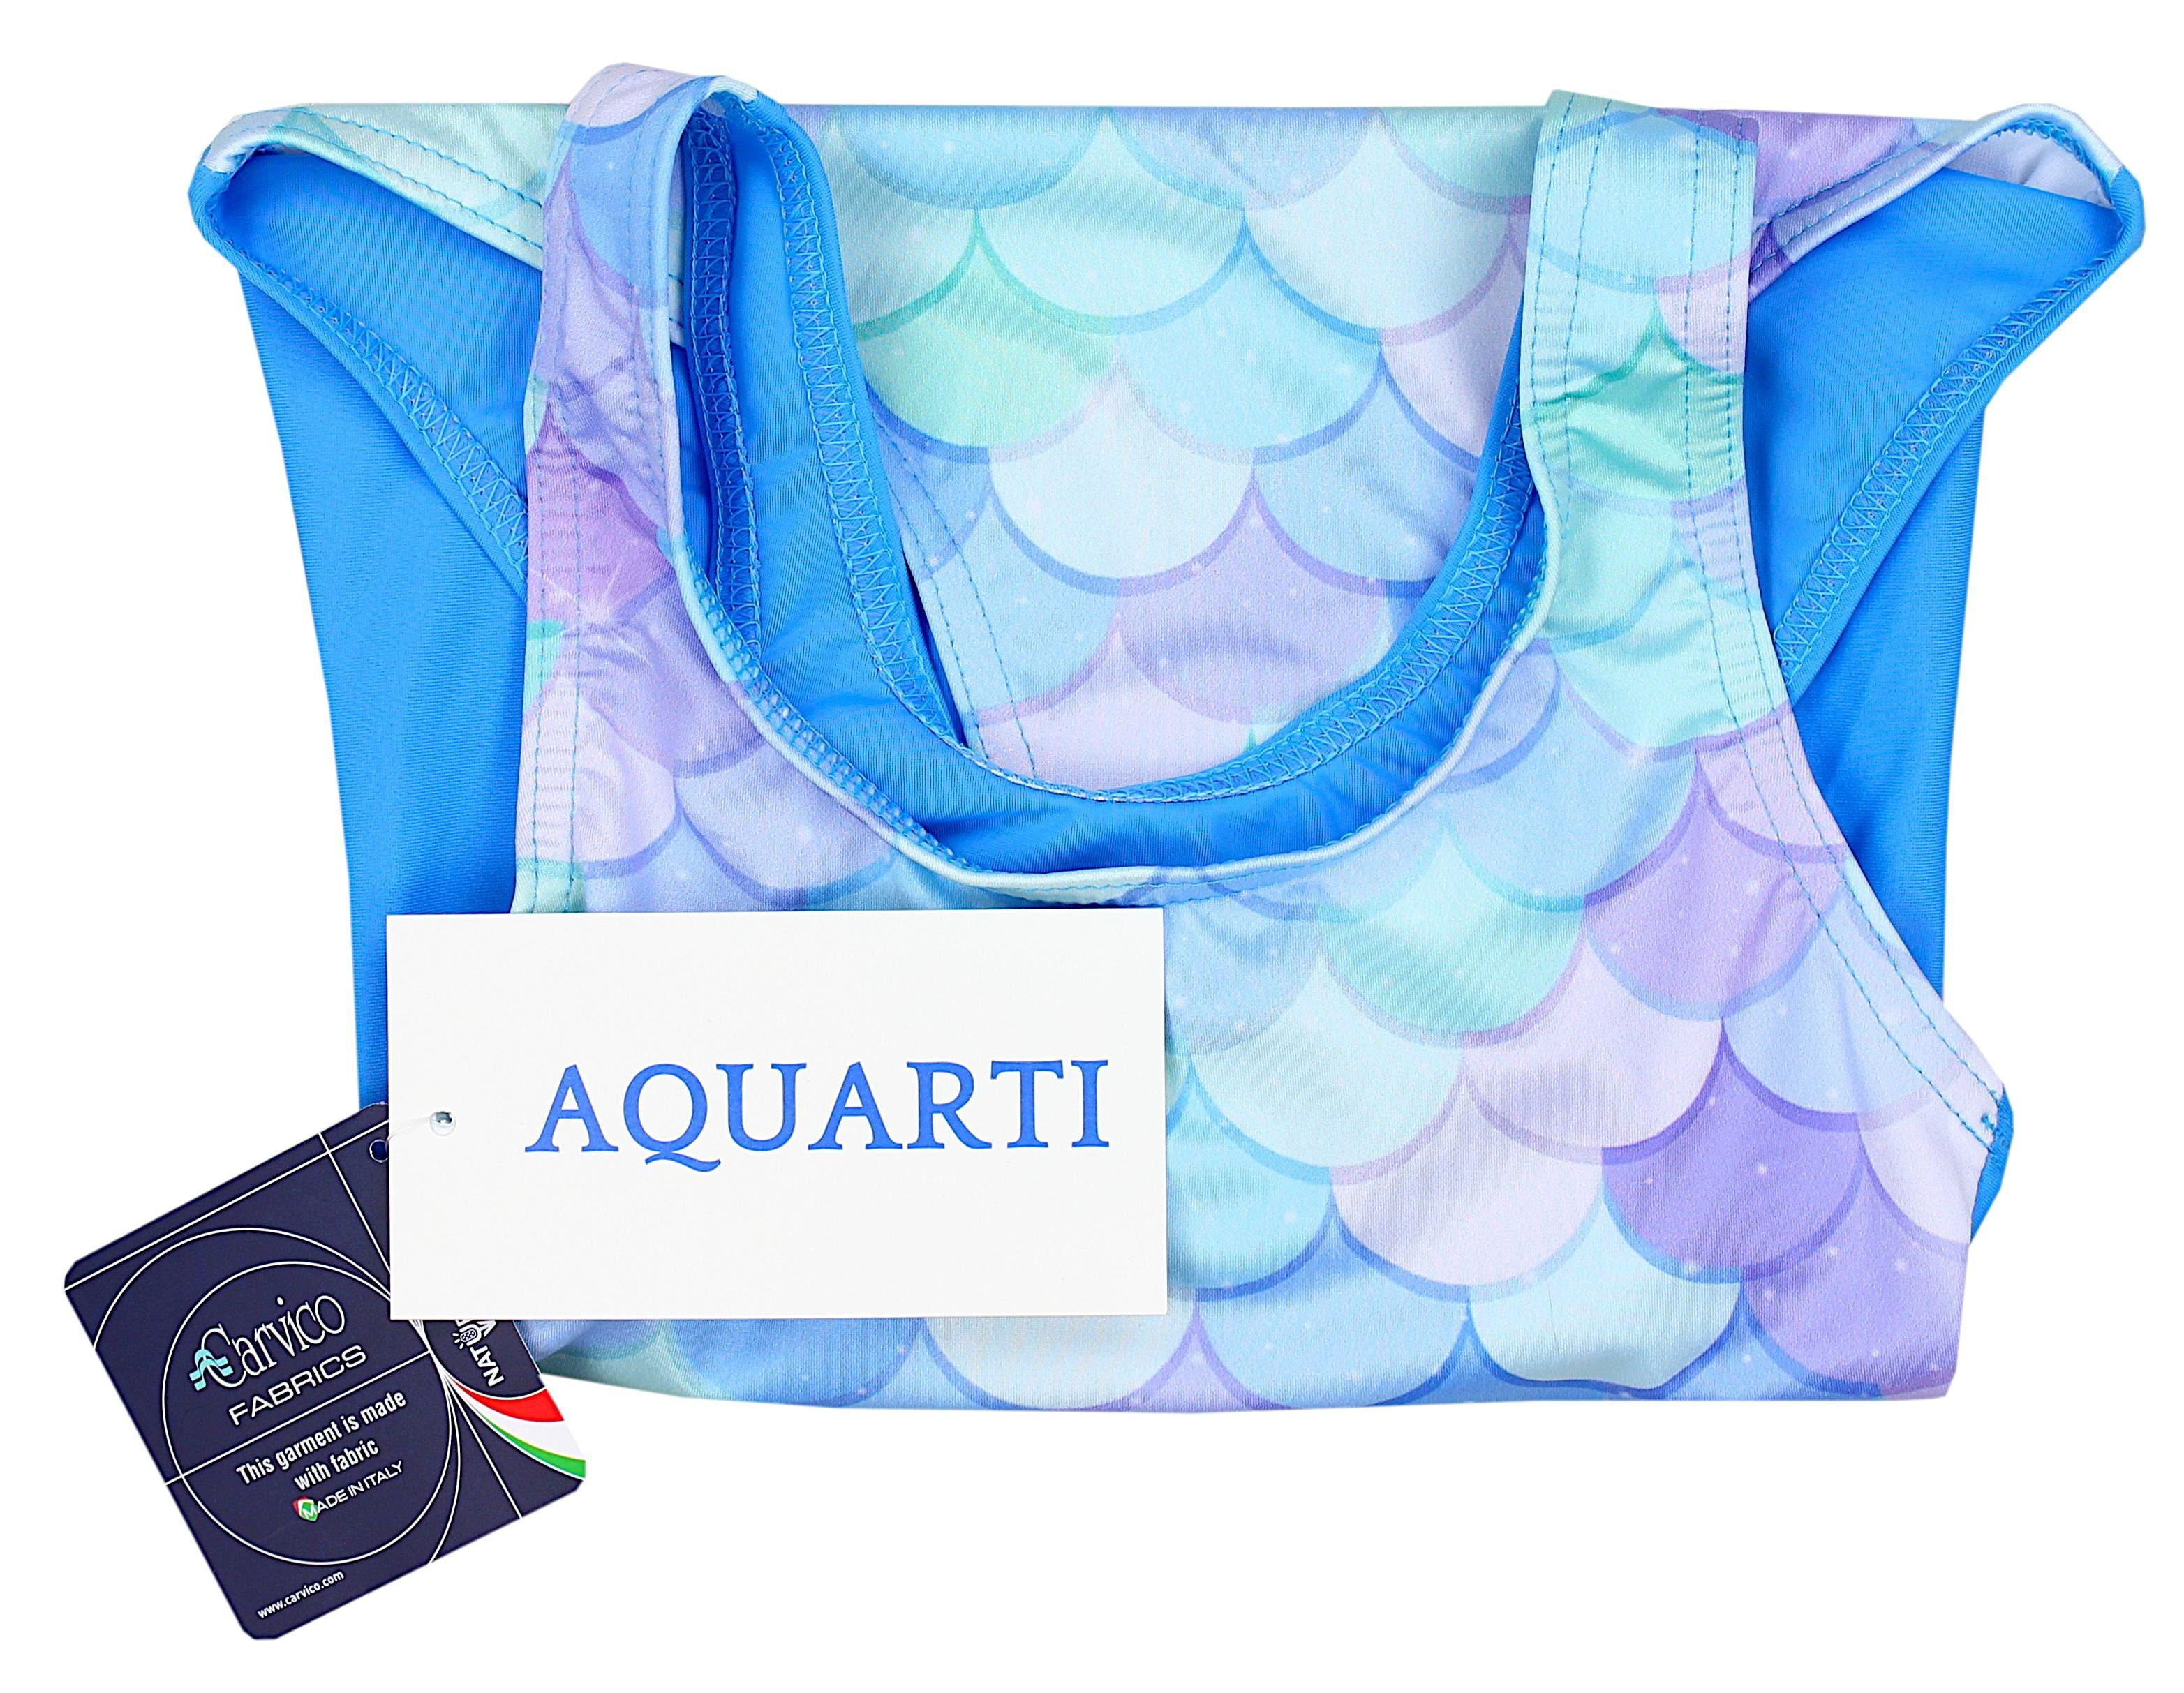 Aquarti Badeanzug Aquarti Mädchen / Badeanzug Violett Grün / Meerjungfrau Ringerrücken mit Print Blau